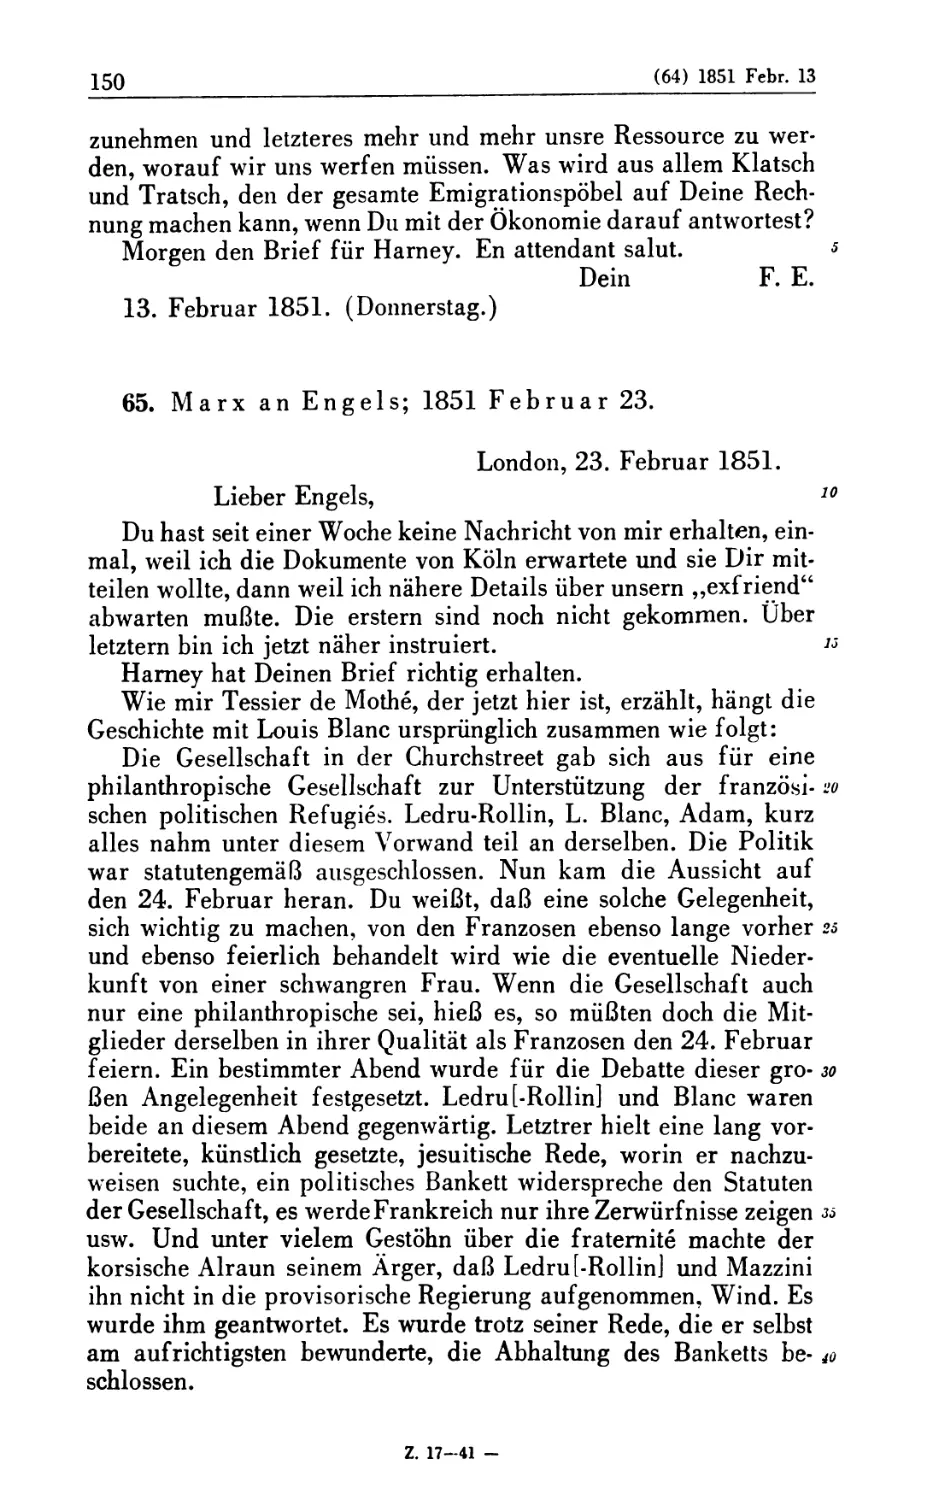 65. Marx an Engels; 1851 Februar 23